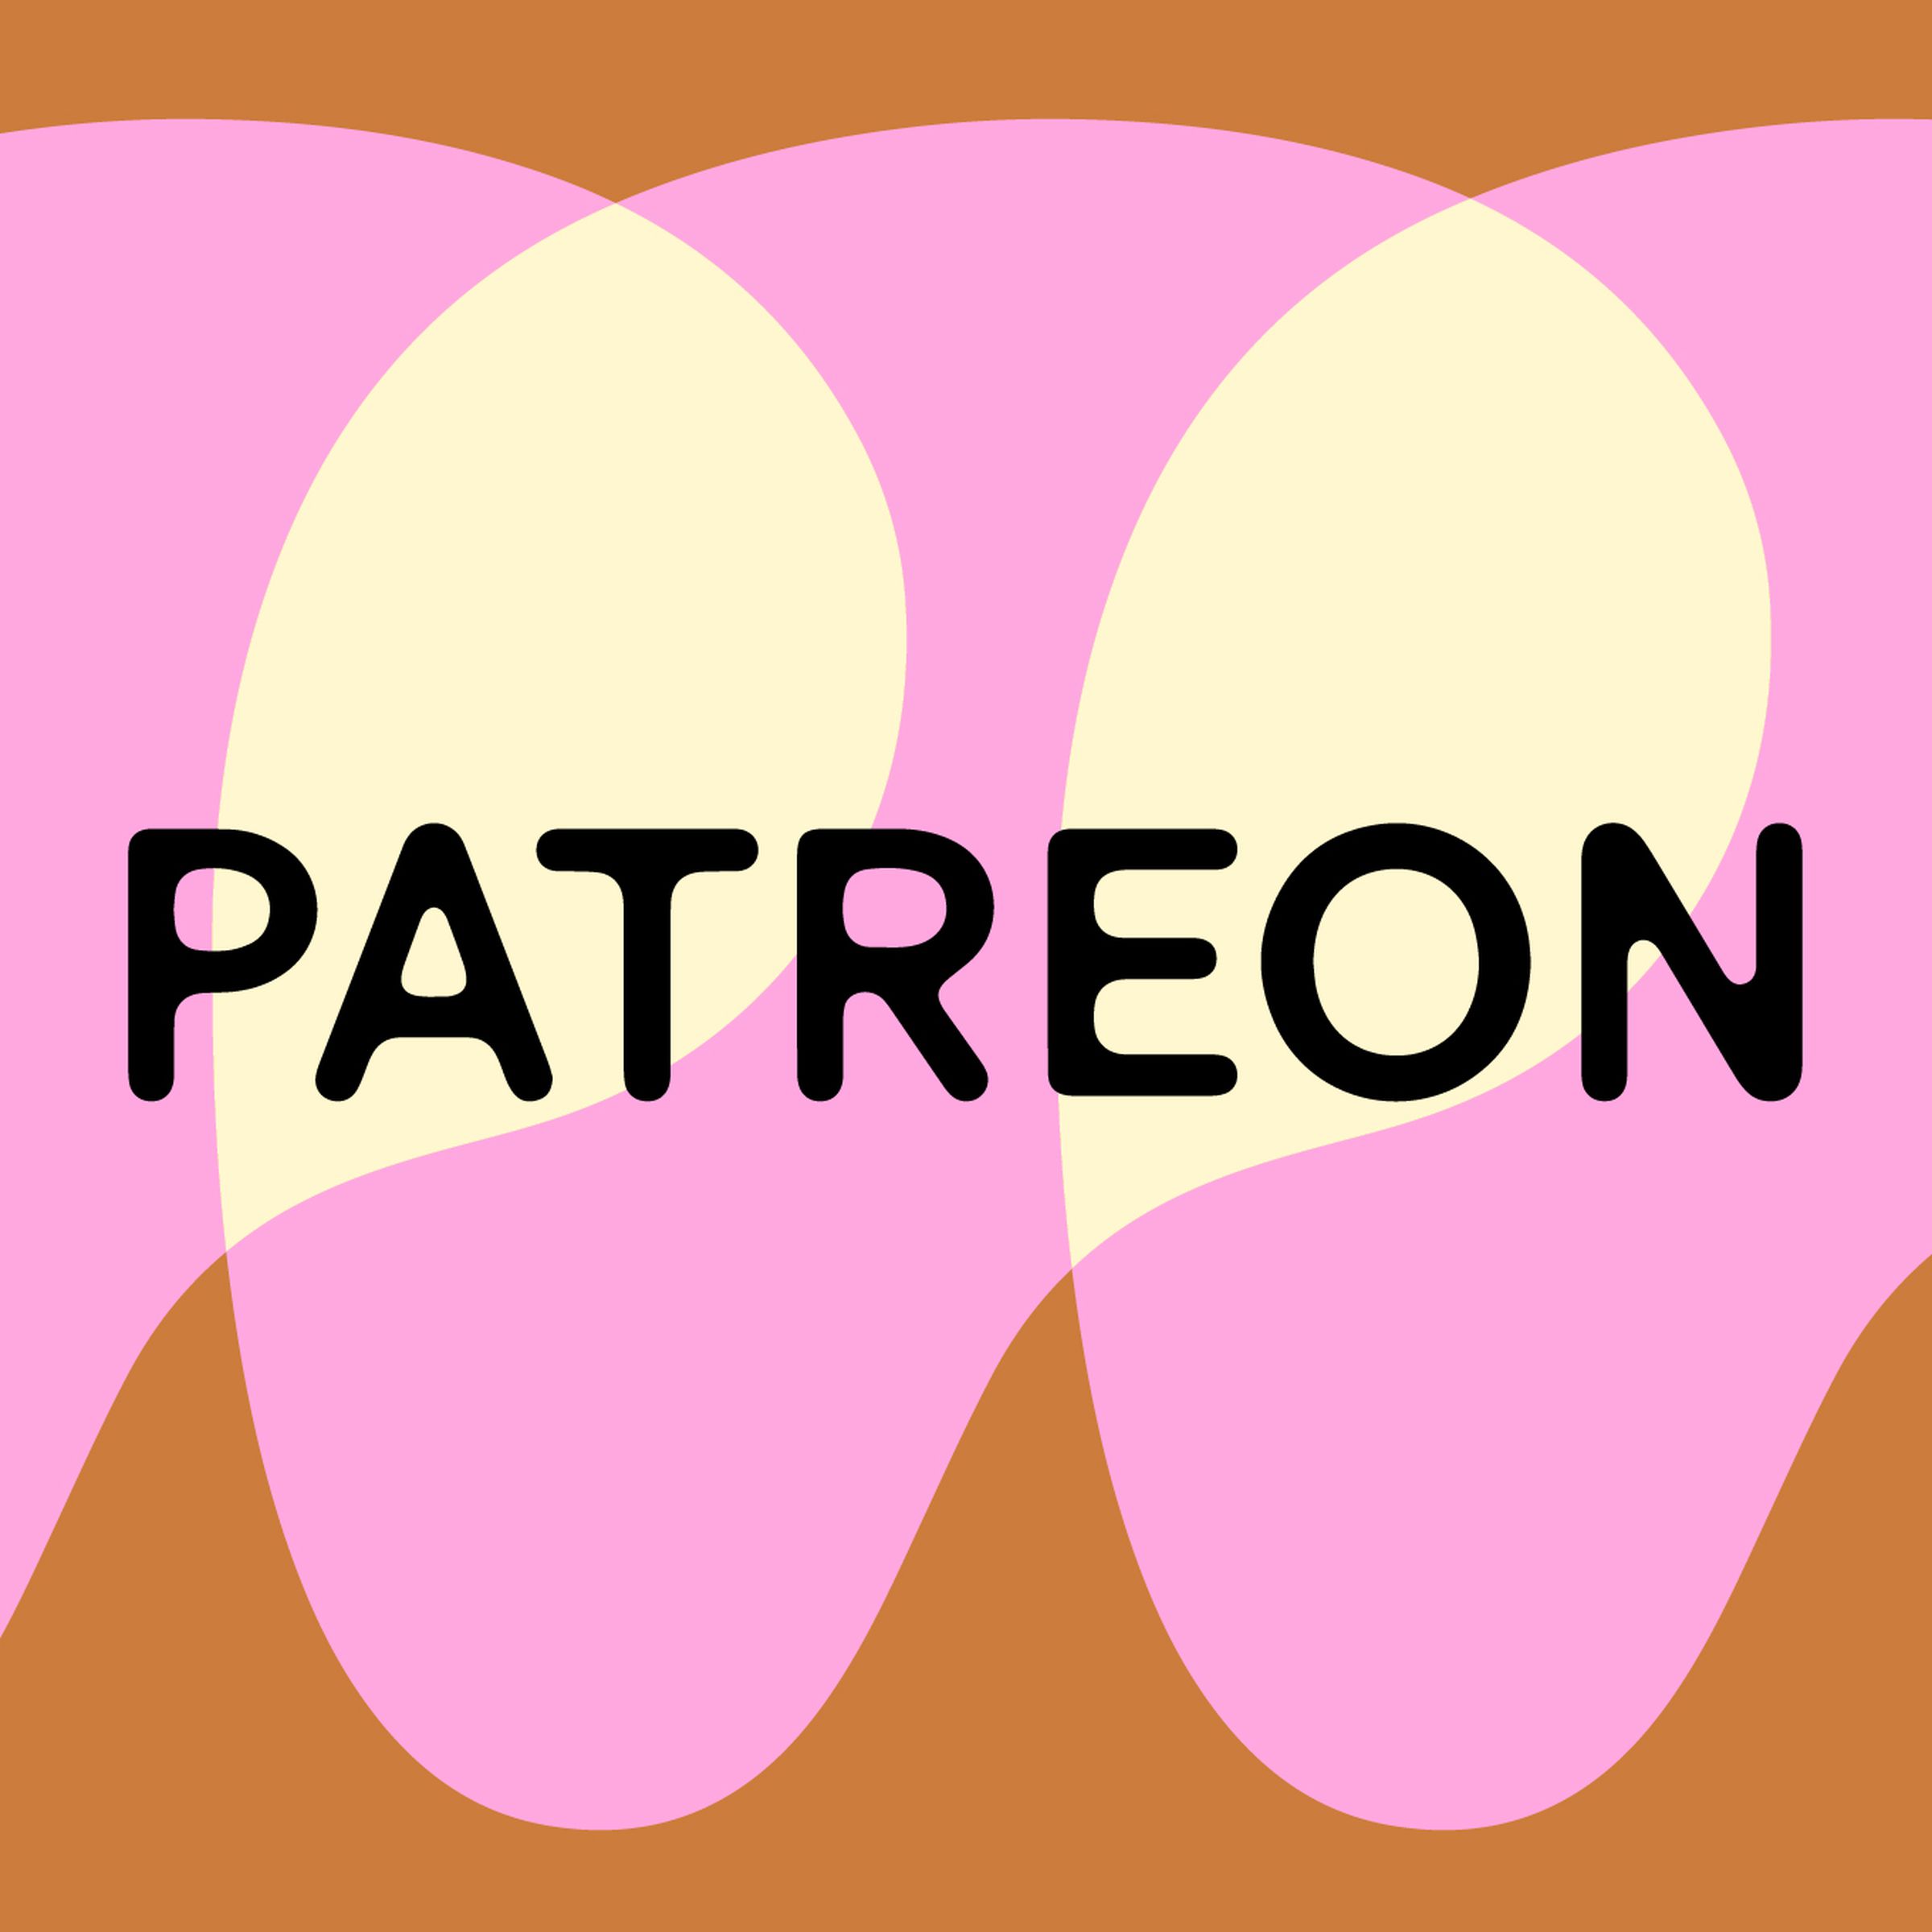 Vector illustration of the Patreon logo.